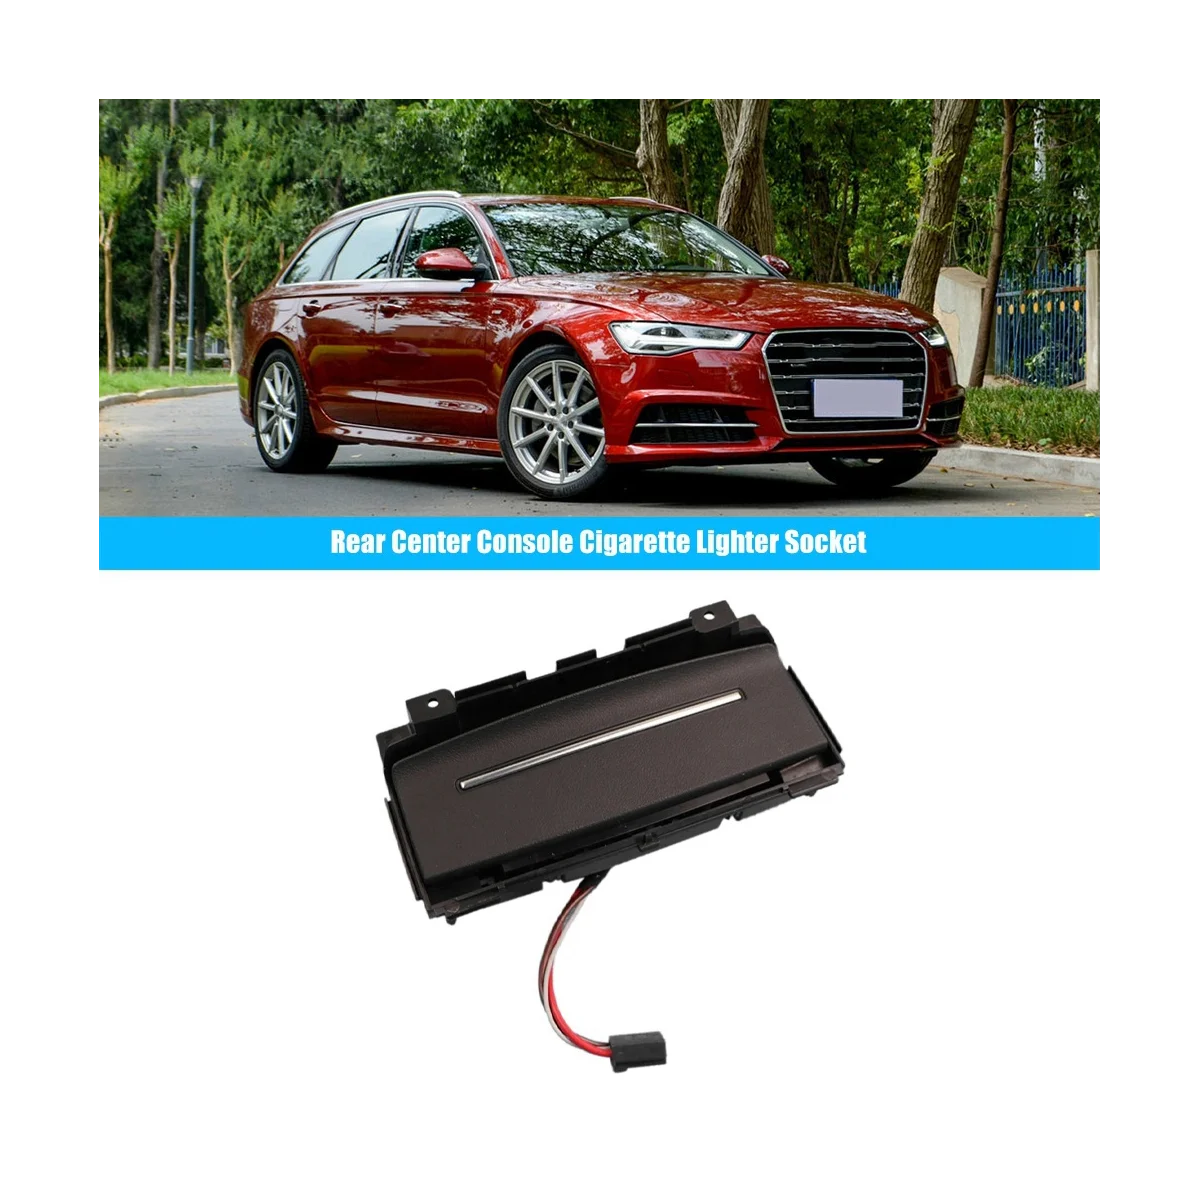 

Car Rear Center Console Cigarette Lighter Socket 12V Power Outlet Assembly for Audi A6 C7/S6/Avant Quattro A7